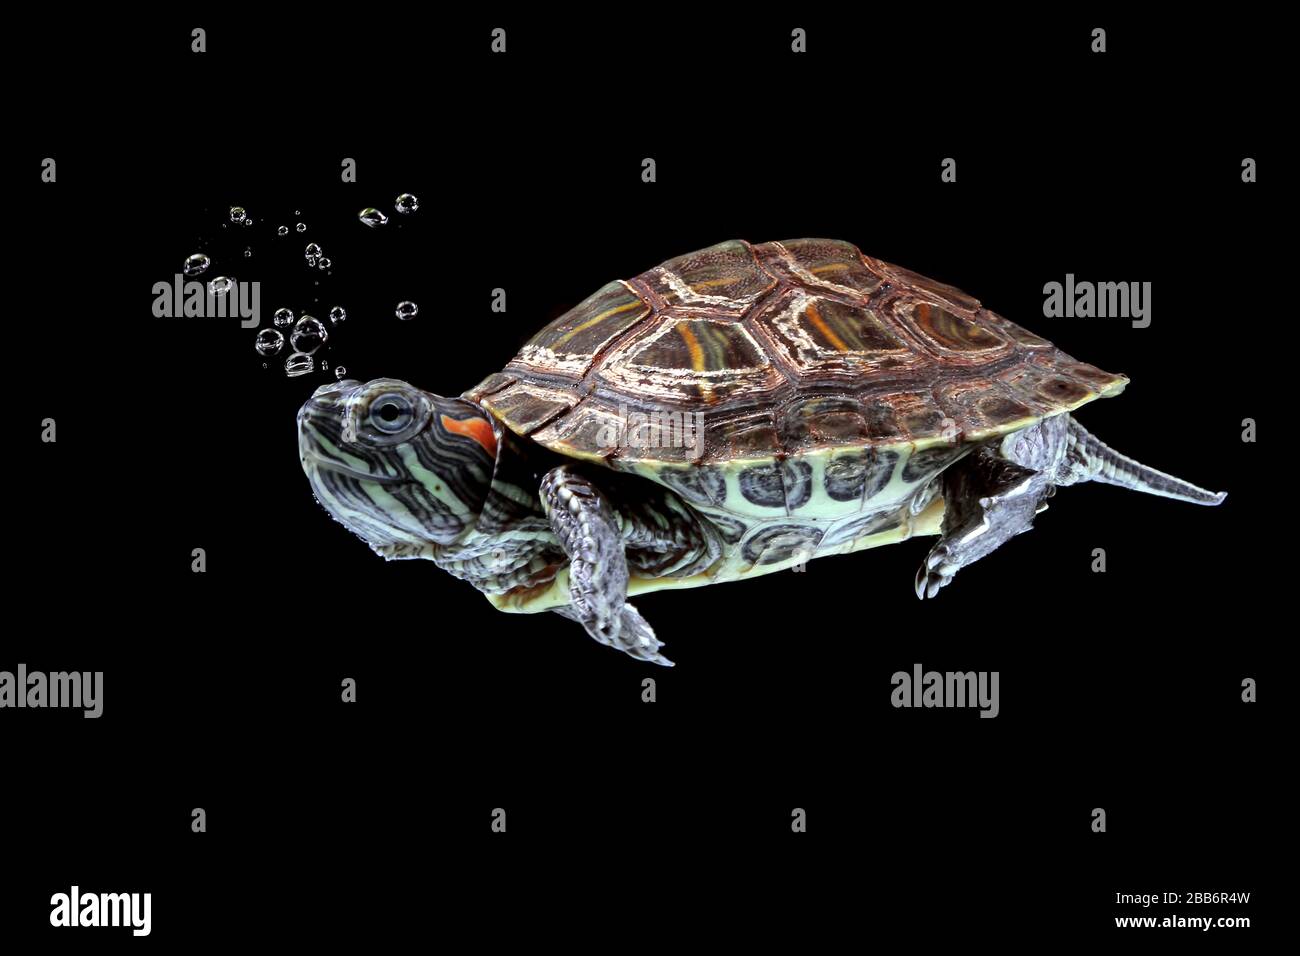 Red-eared slider turtle swimming underwater, Indonesia Stock Photo